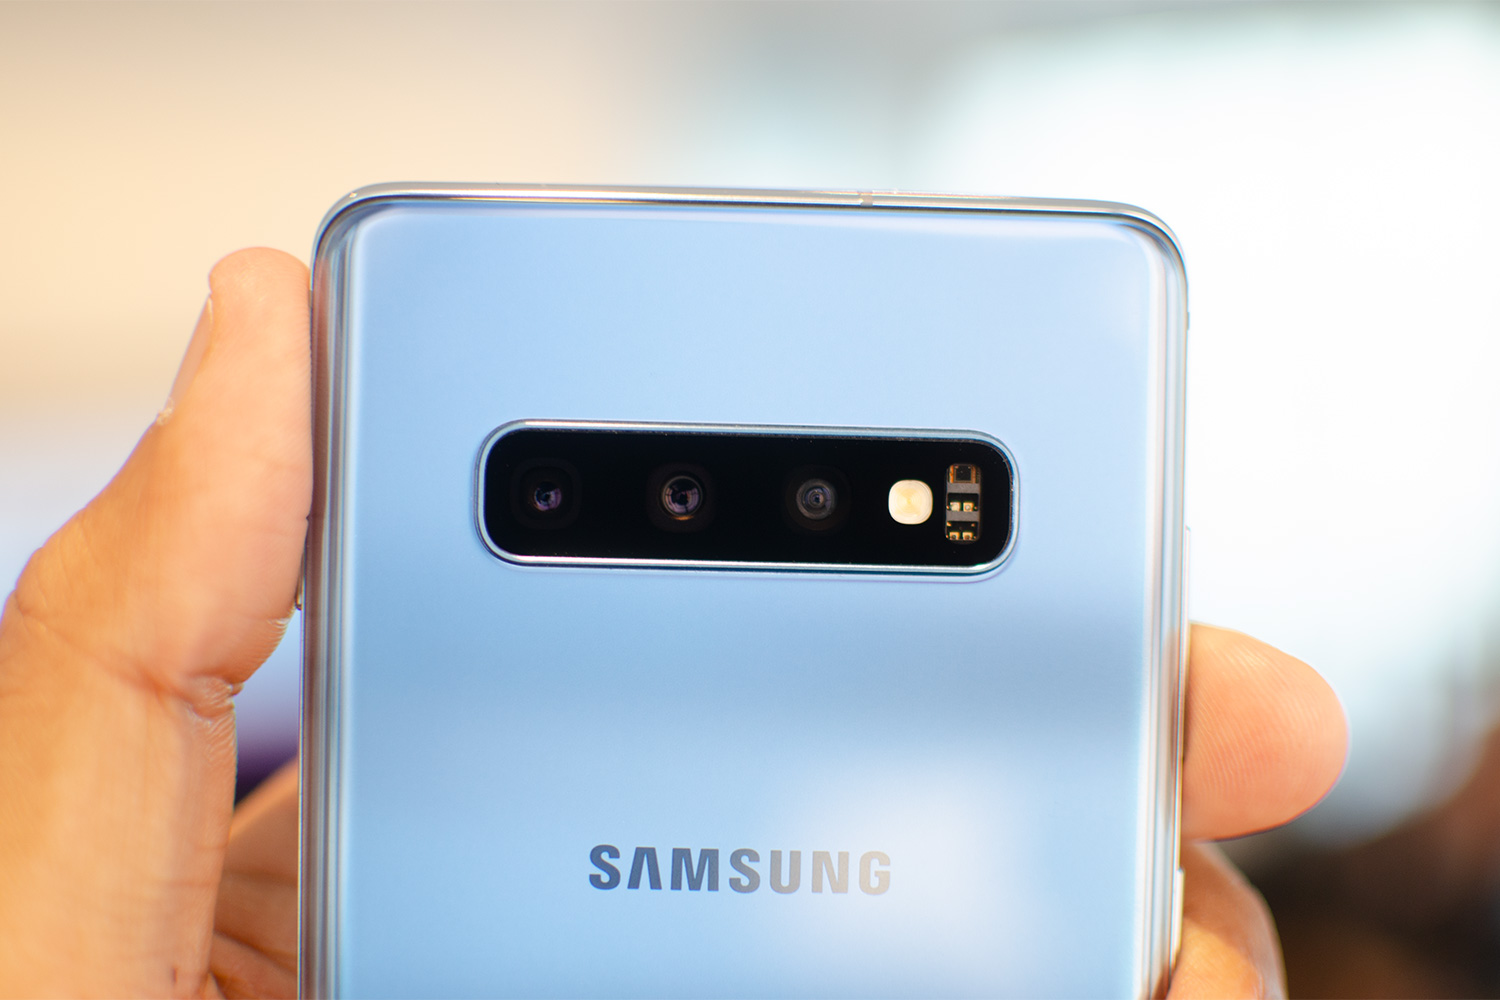 Samsung Galaxy s10 plus hands-on